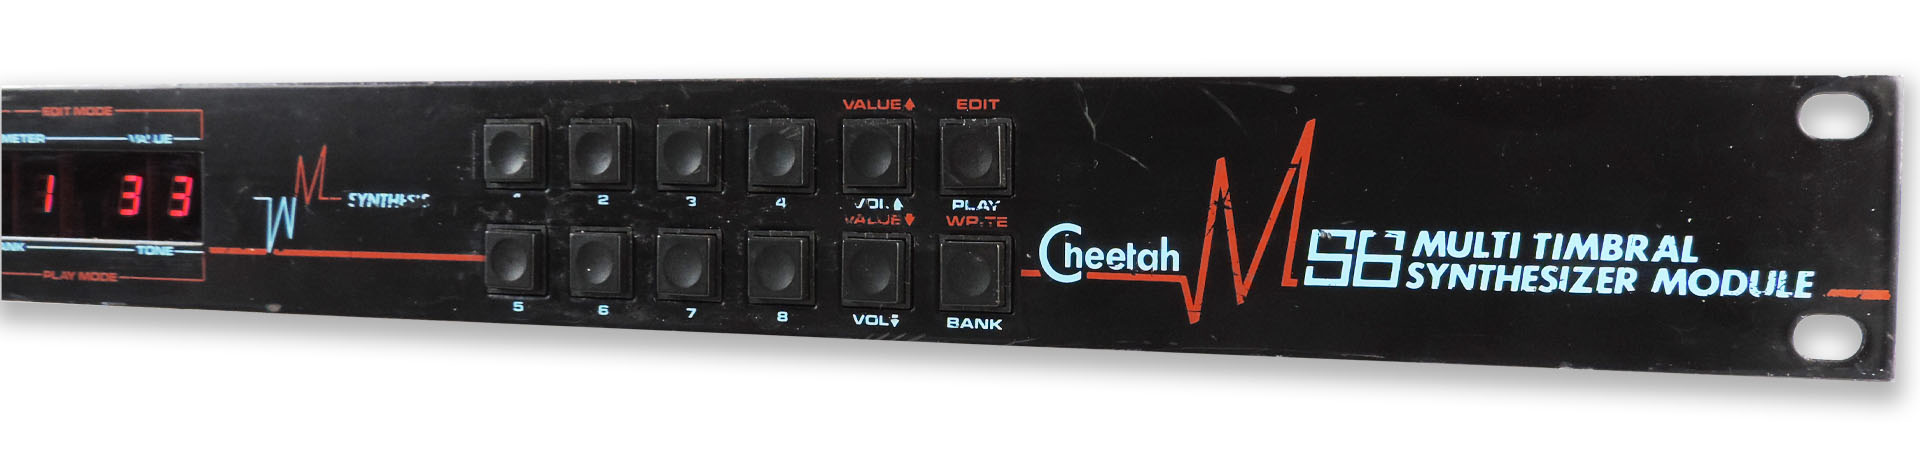 Cheetah MS6 Front Panel